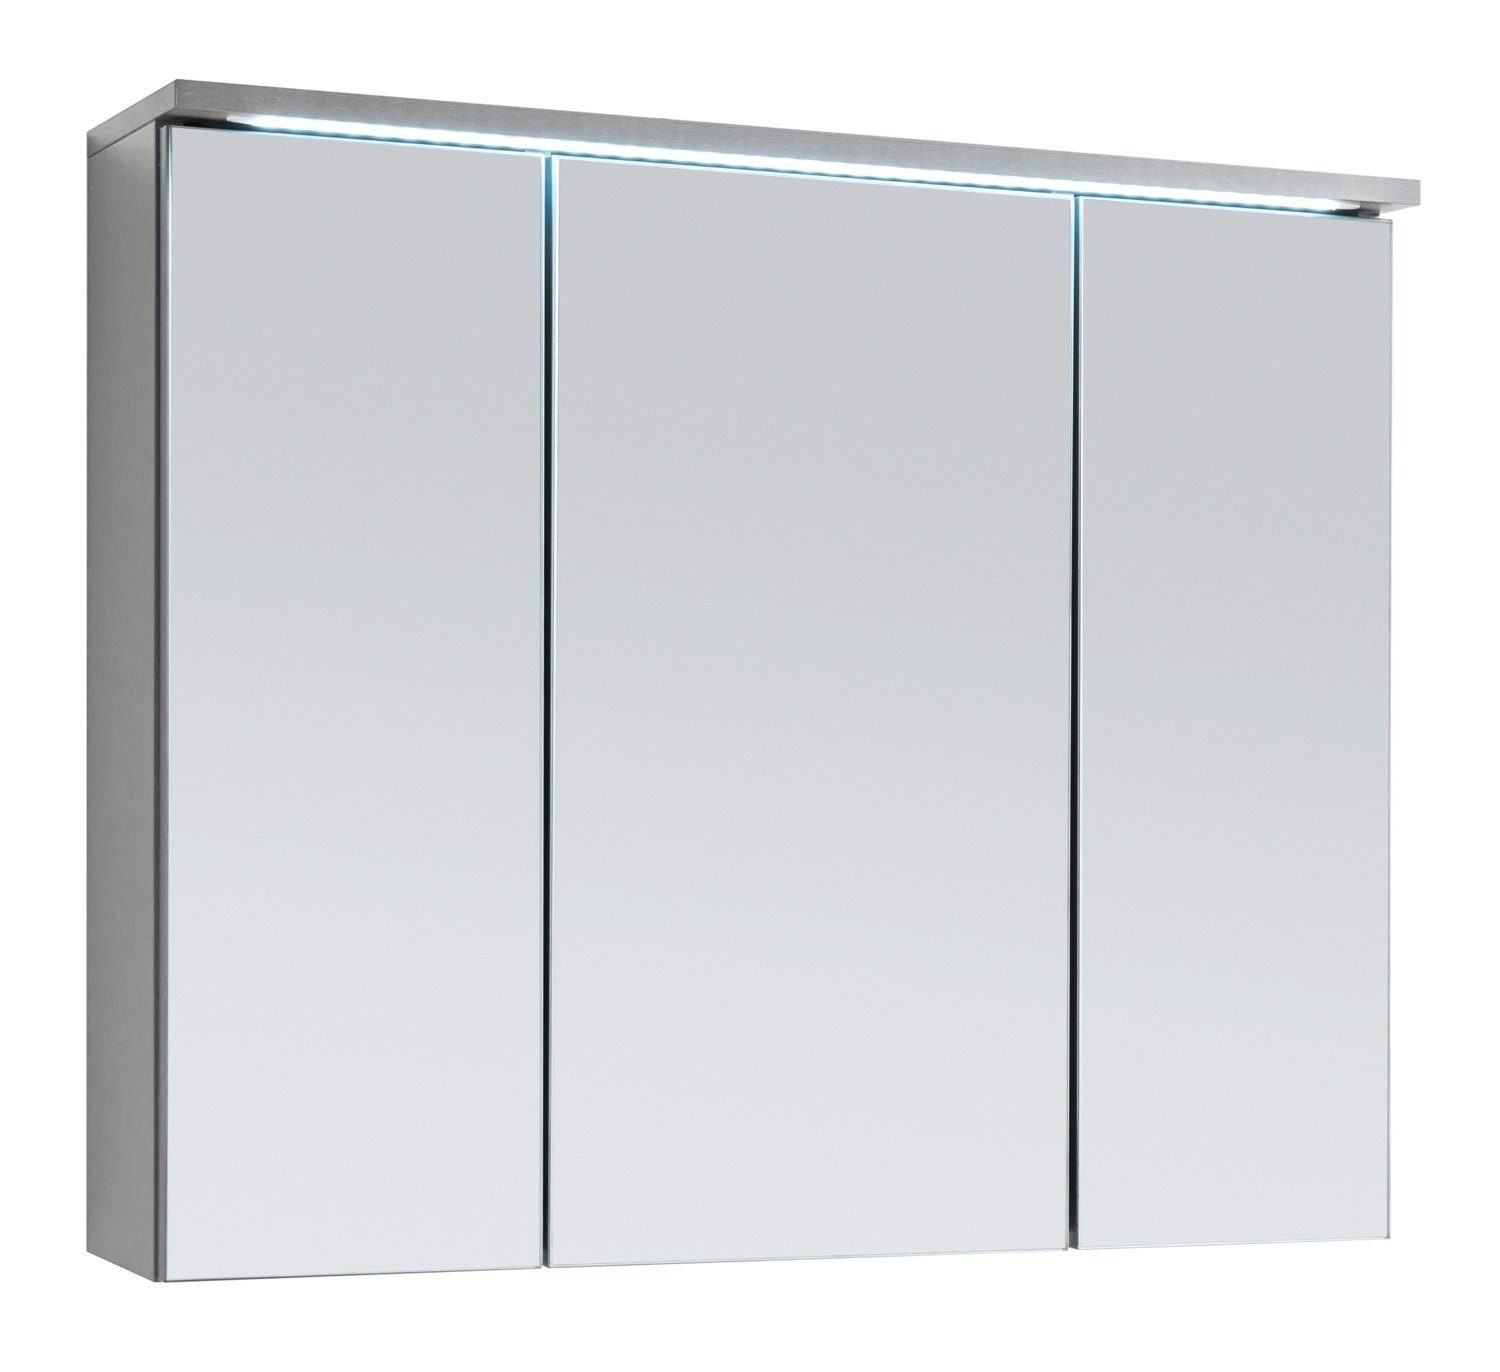 Badezimmerspiegelschrank TWO, B 80 cm, Titanfarben, inkl. LED-Beleuchtung